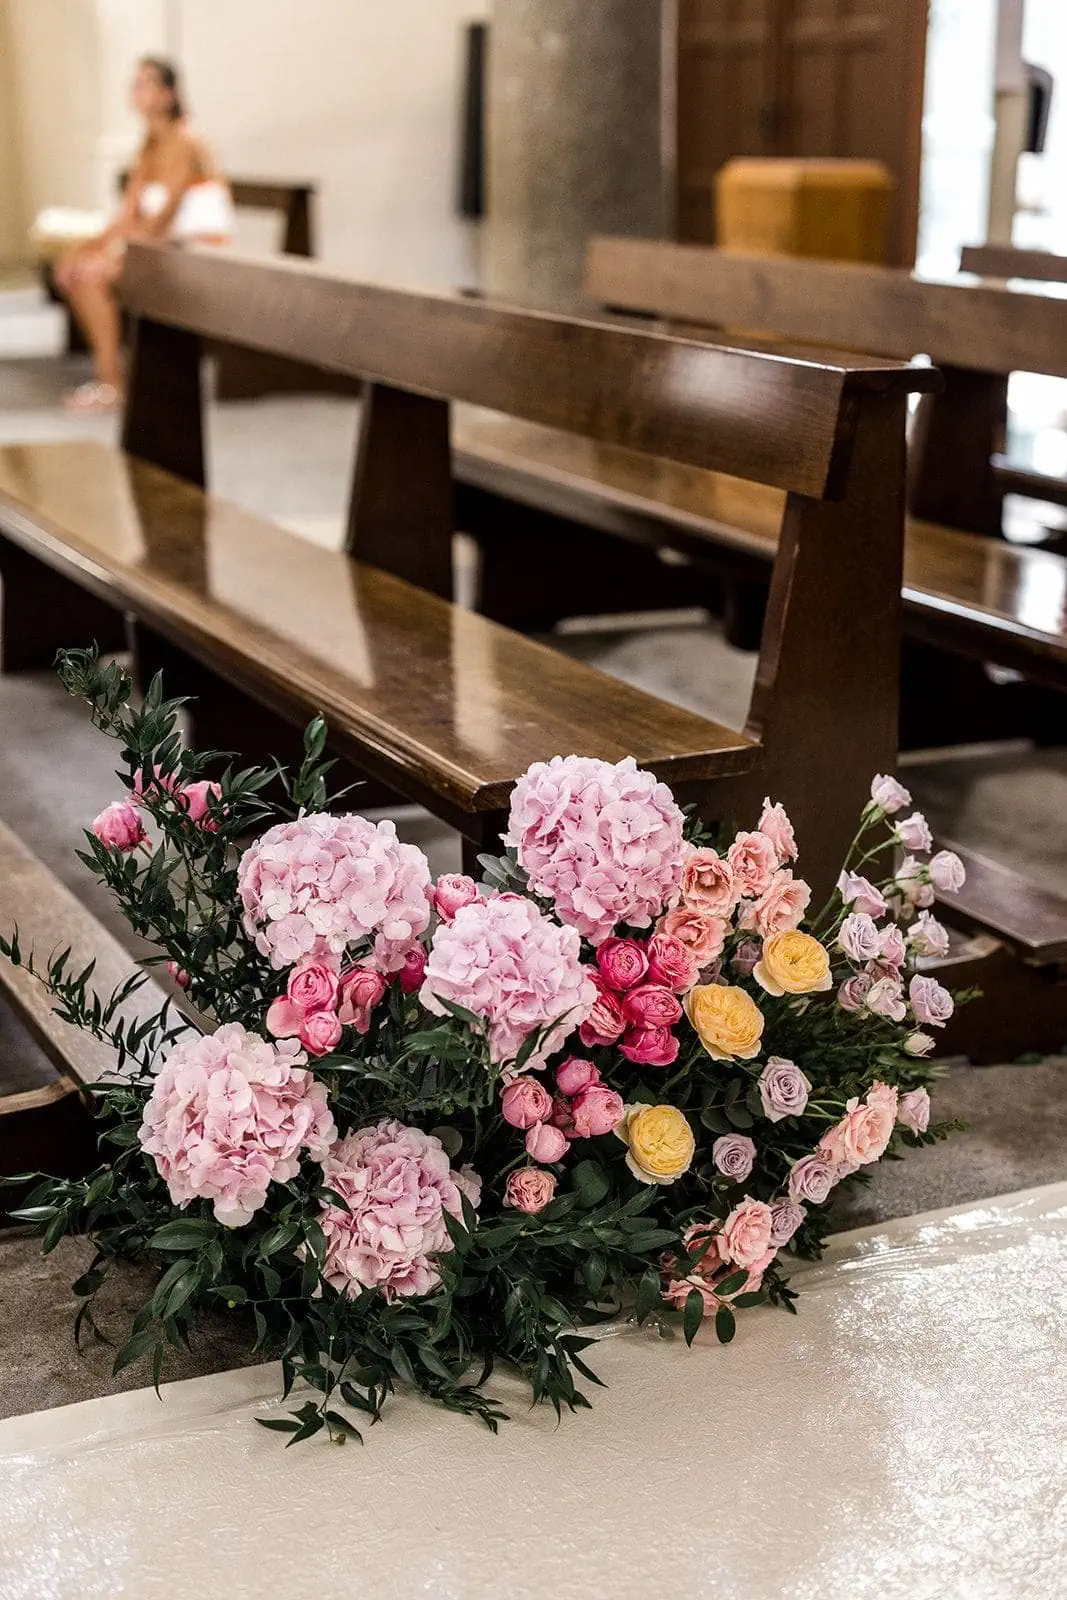 Aisle floral arrangement during church wedding ceremony